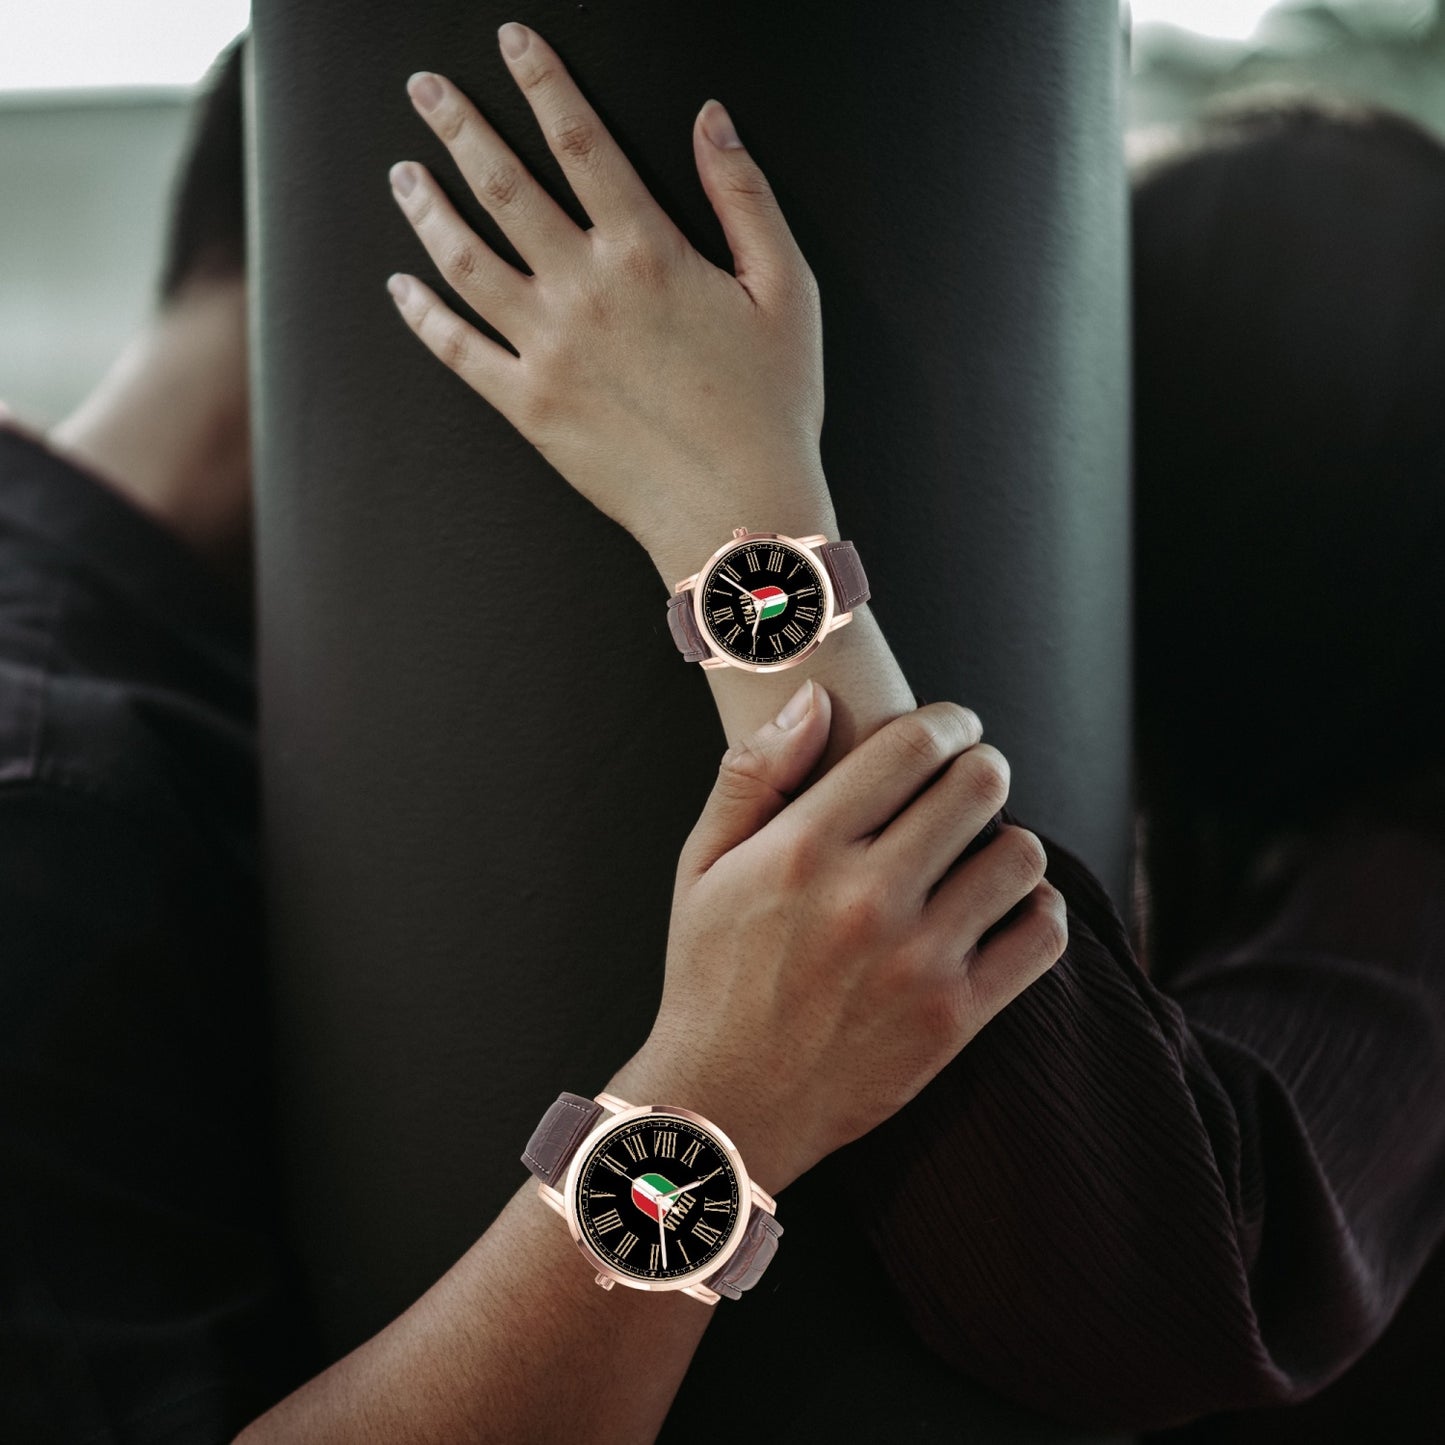 Stemma Italia - Premium Quartz Watch Stainless Steel Case & Leather Bands